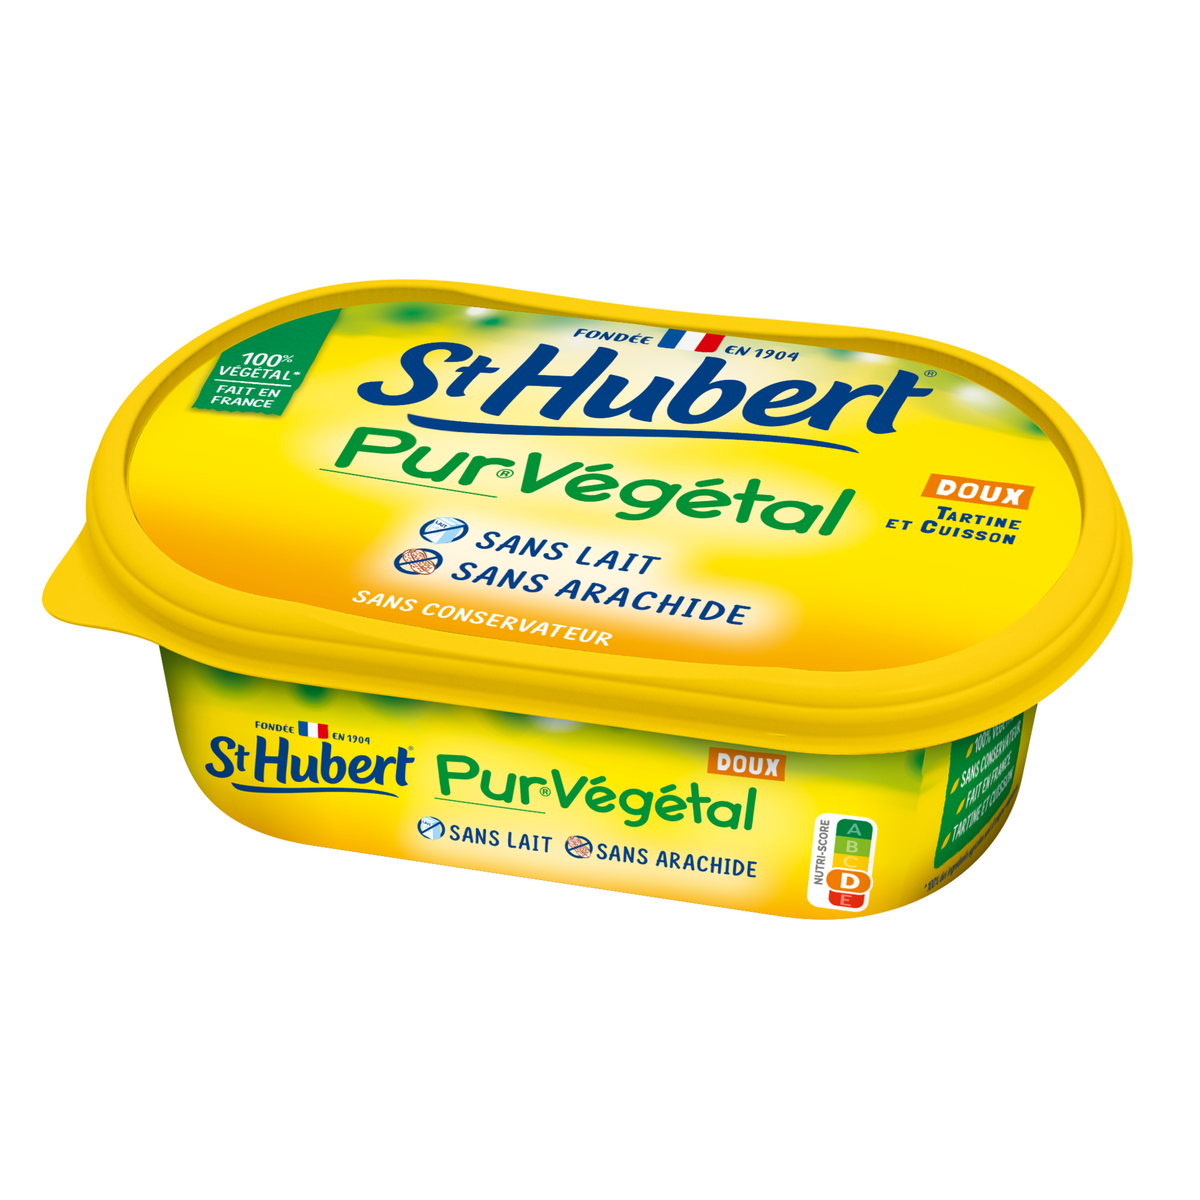 ST HUBERT Pur végétal margarine doux tartine et cuisson 275g